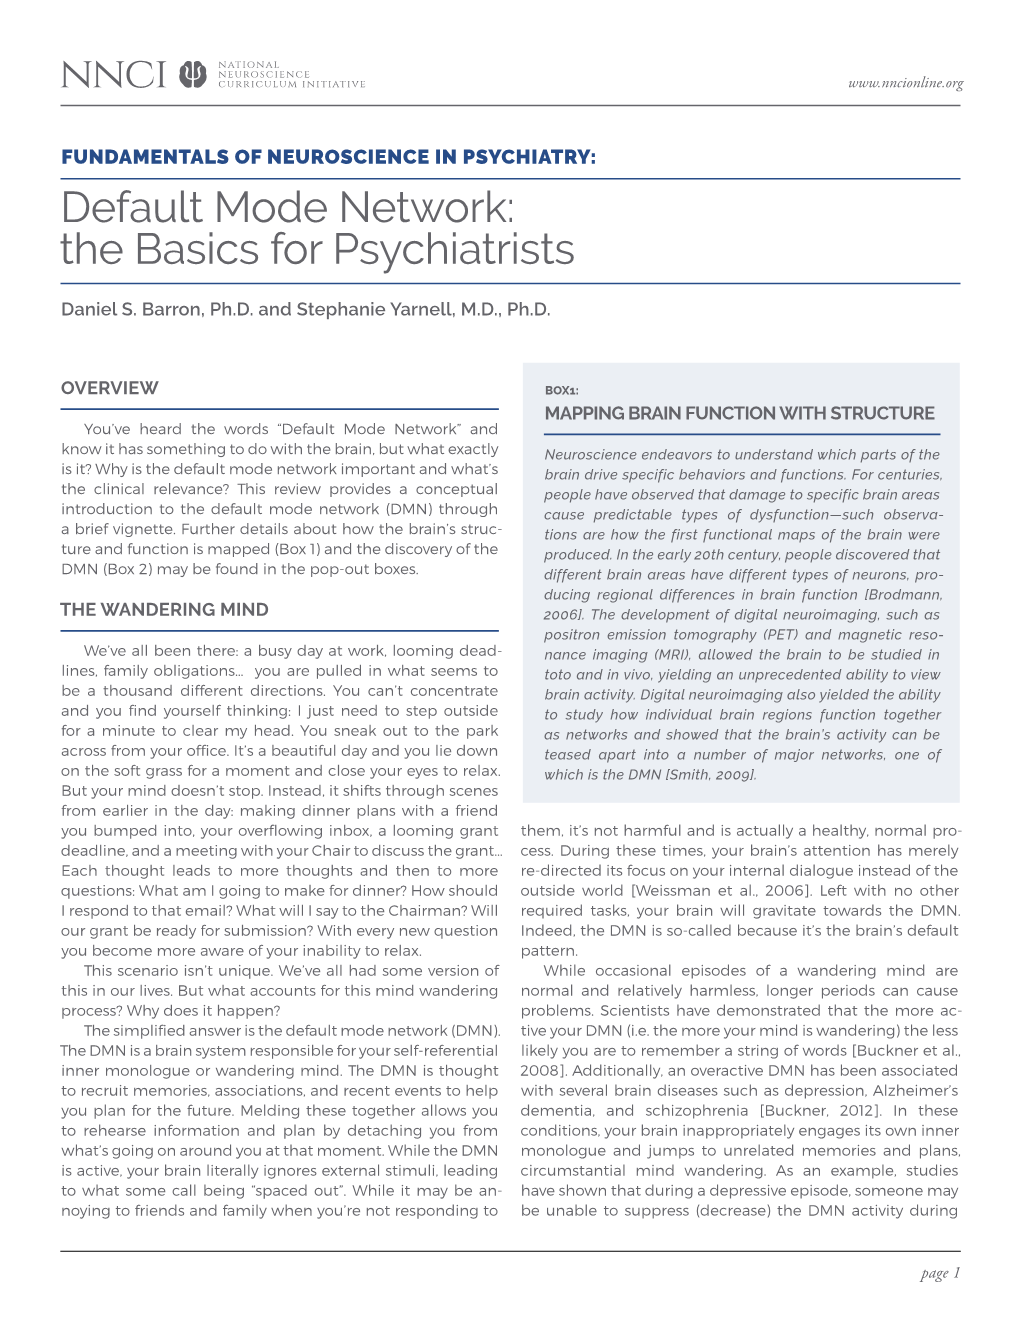 Default Mode Network: the Basics for Psychiatrists